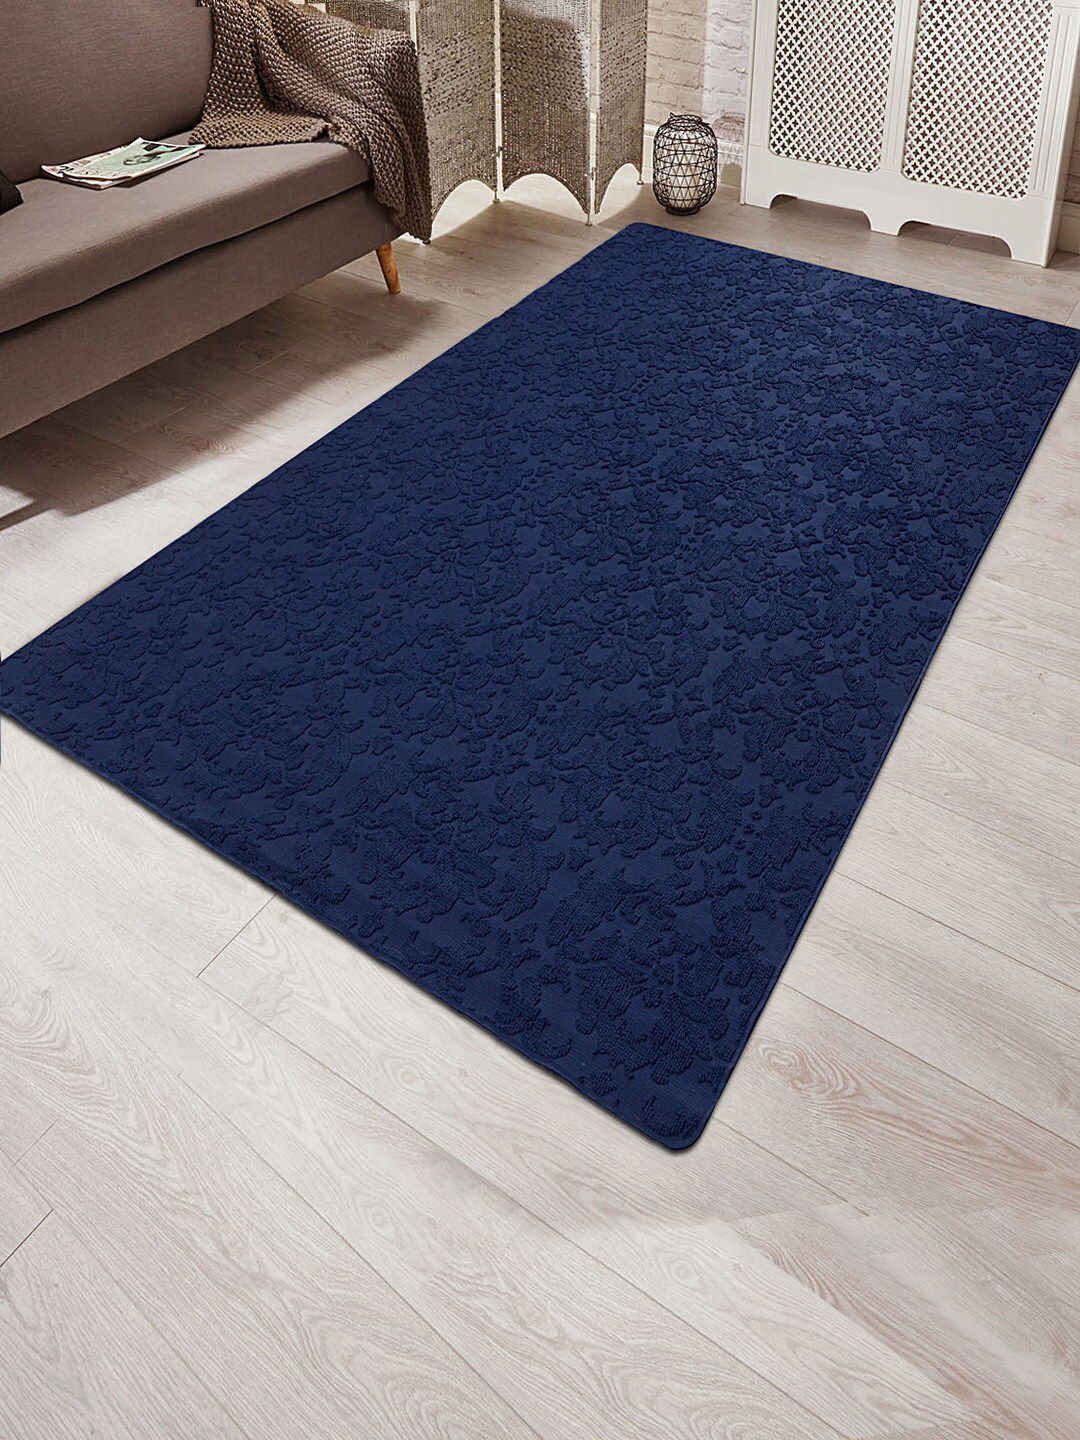 Saral Home Blue Self-Design Microfiber Anti-Skid Carpet Price in India